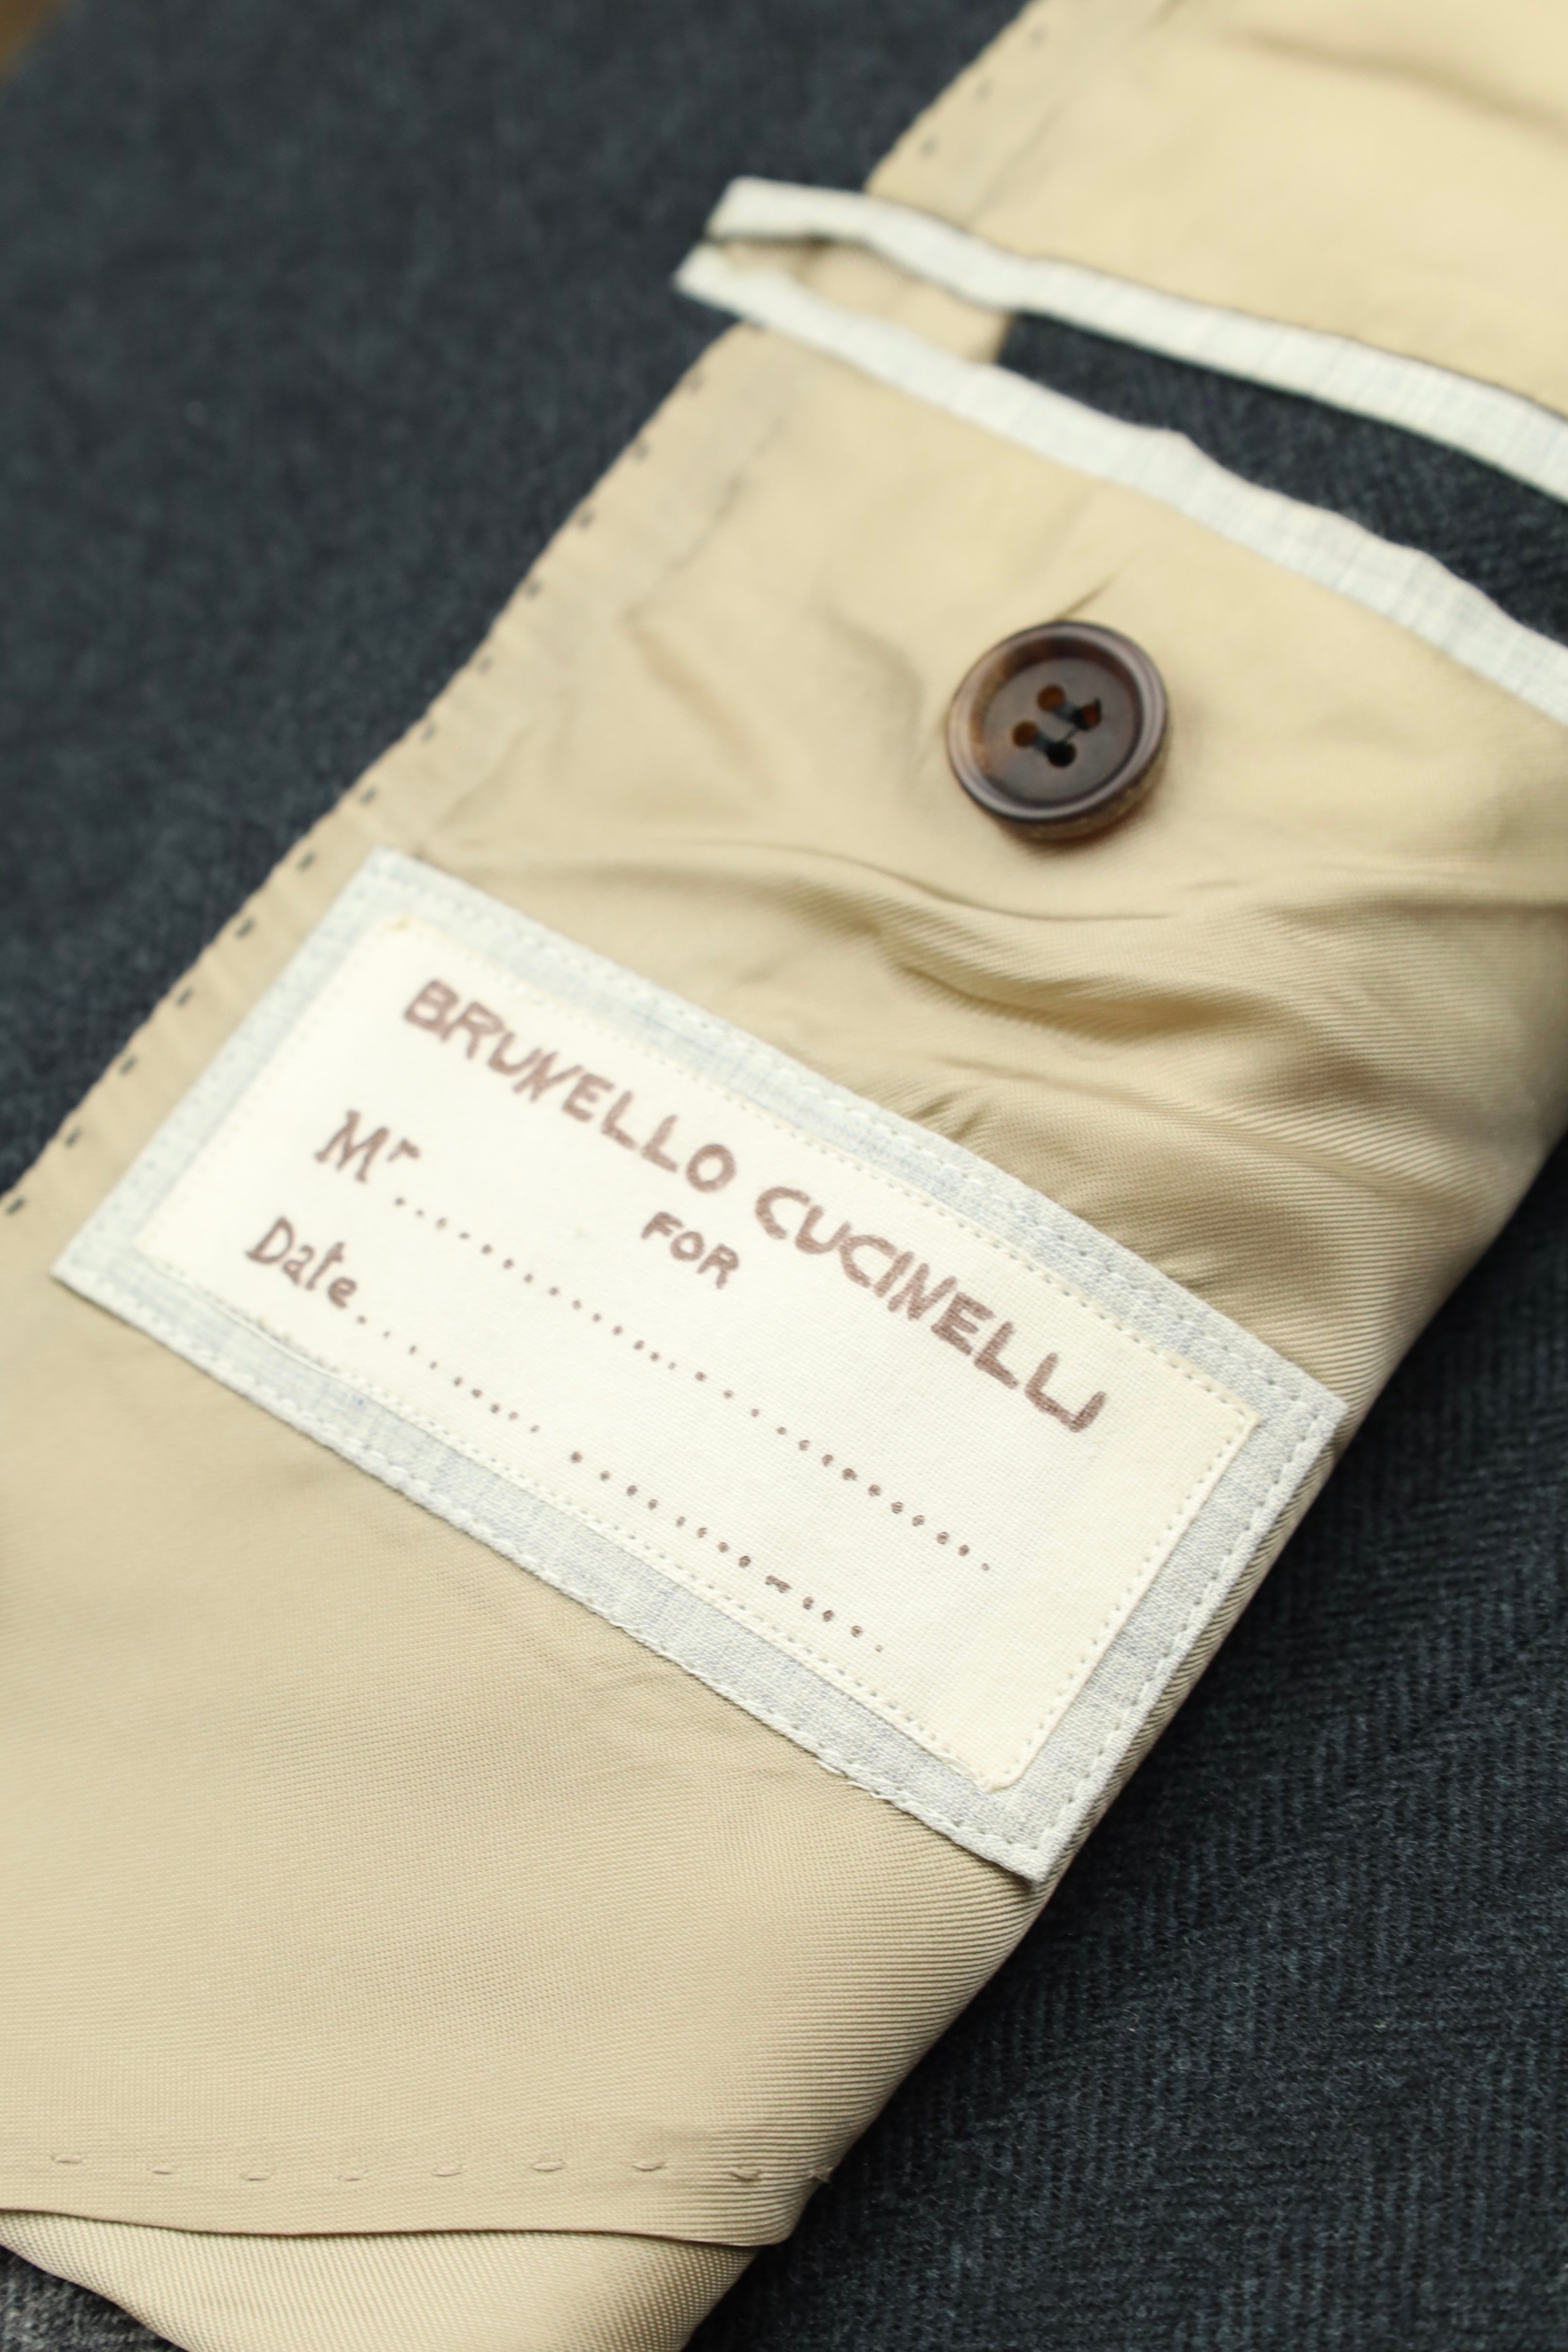 Brunello Cucinelli Dusk Green Wool & Cashmere Herringbone Jacket